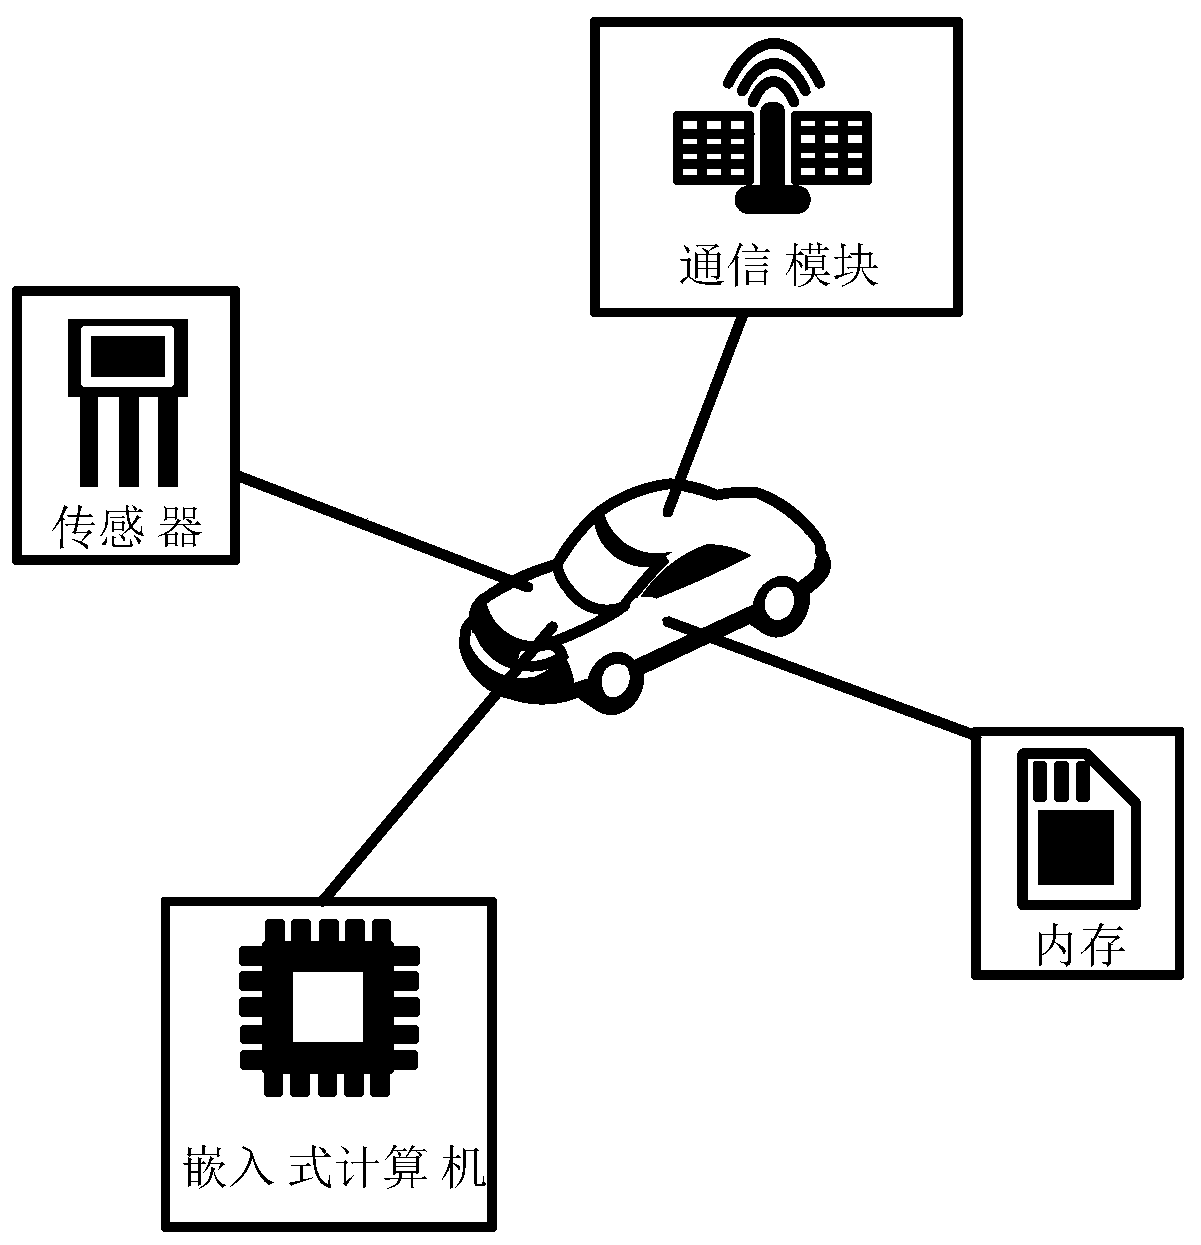 Intelligent traffic data safety sharing method based on alliance block chain